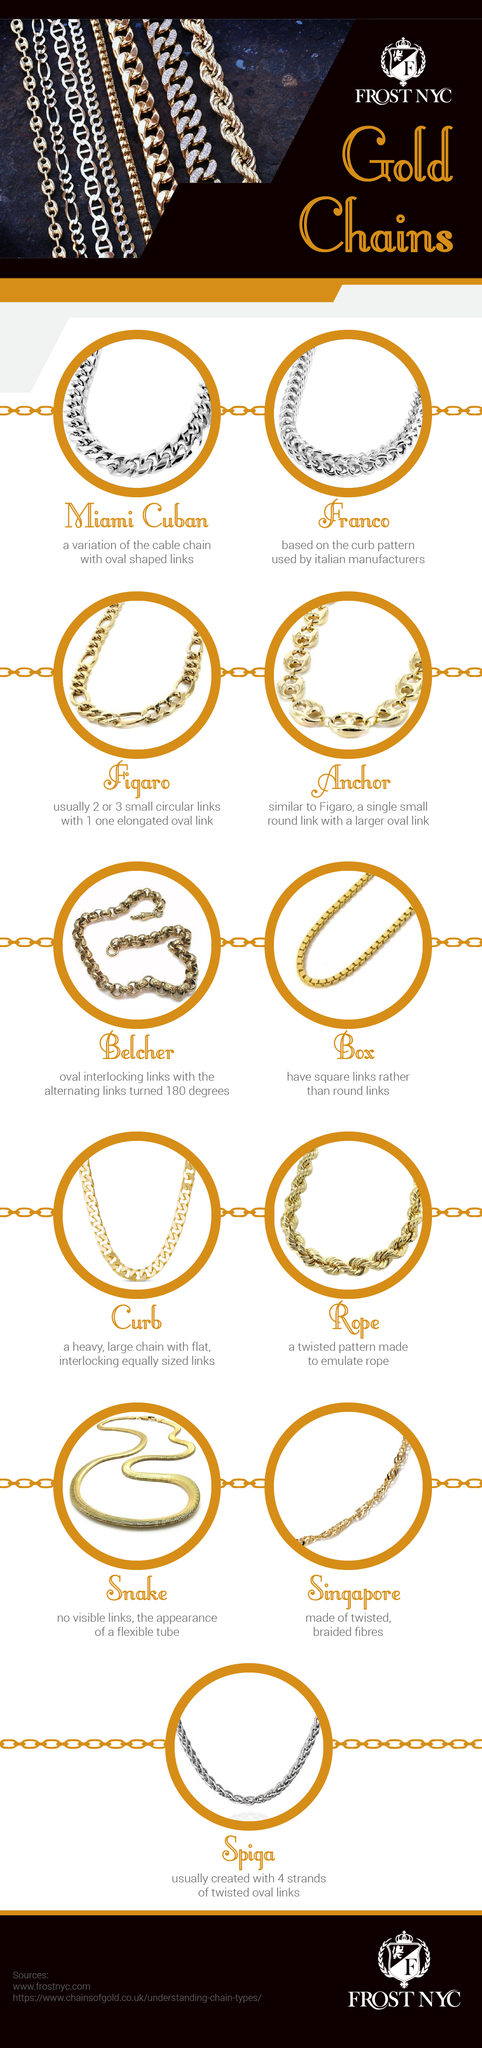 Infografik zur Goldkette 